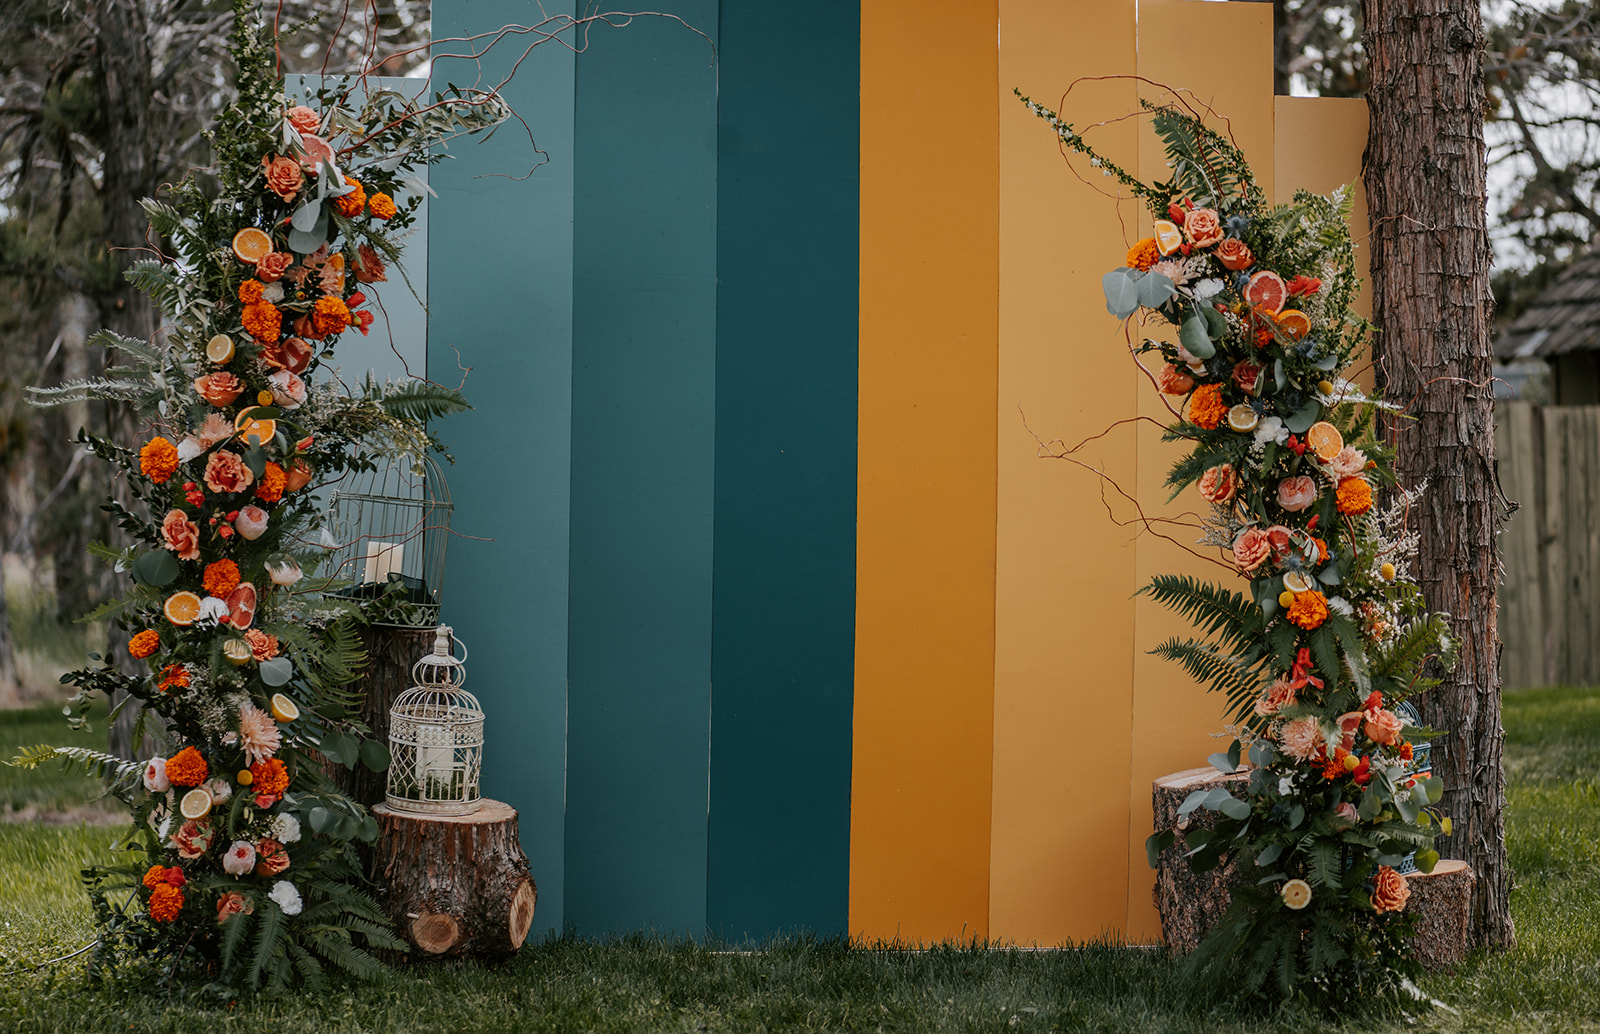 Unique DIY wedding arbor with citrus fruits and flowers